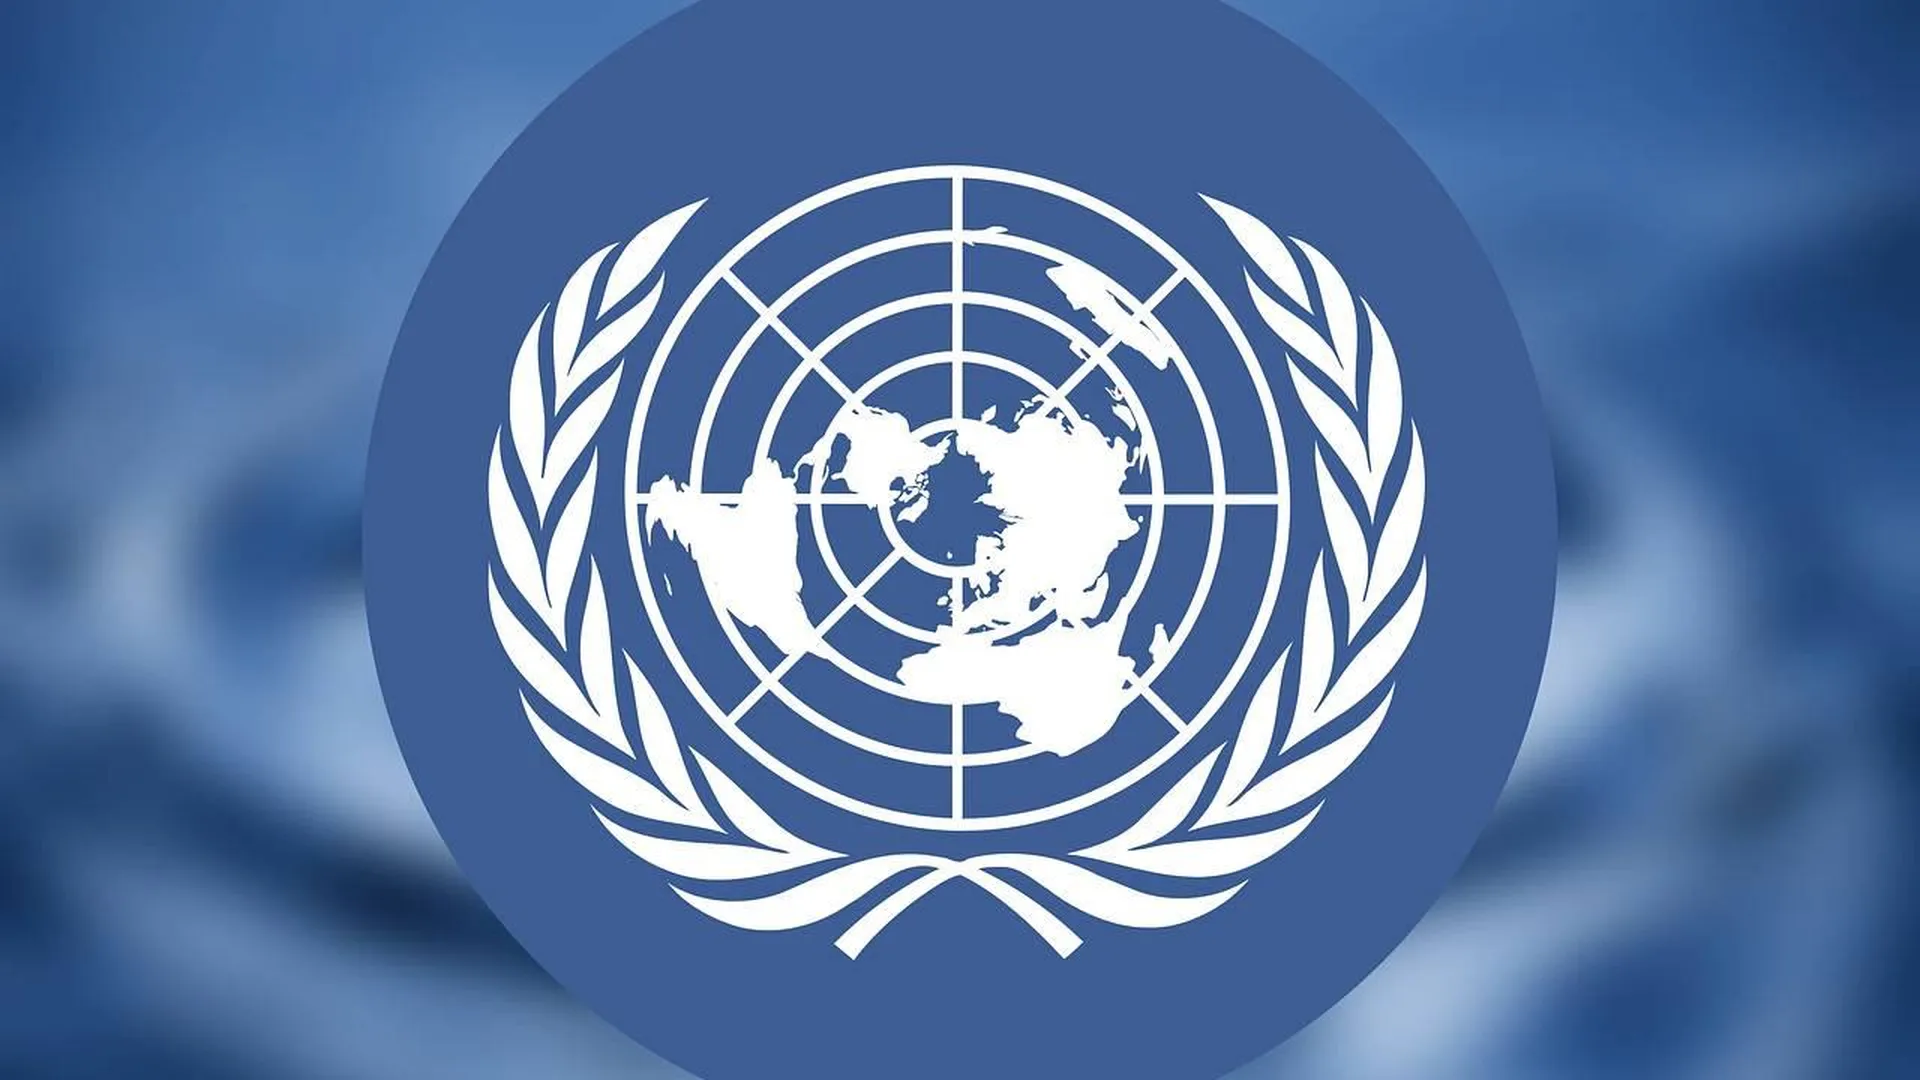 Оон имена. Организация Объединенных наций эмблема. Флаг ООН. ООН лого. Символ ООН.